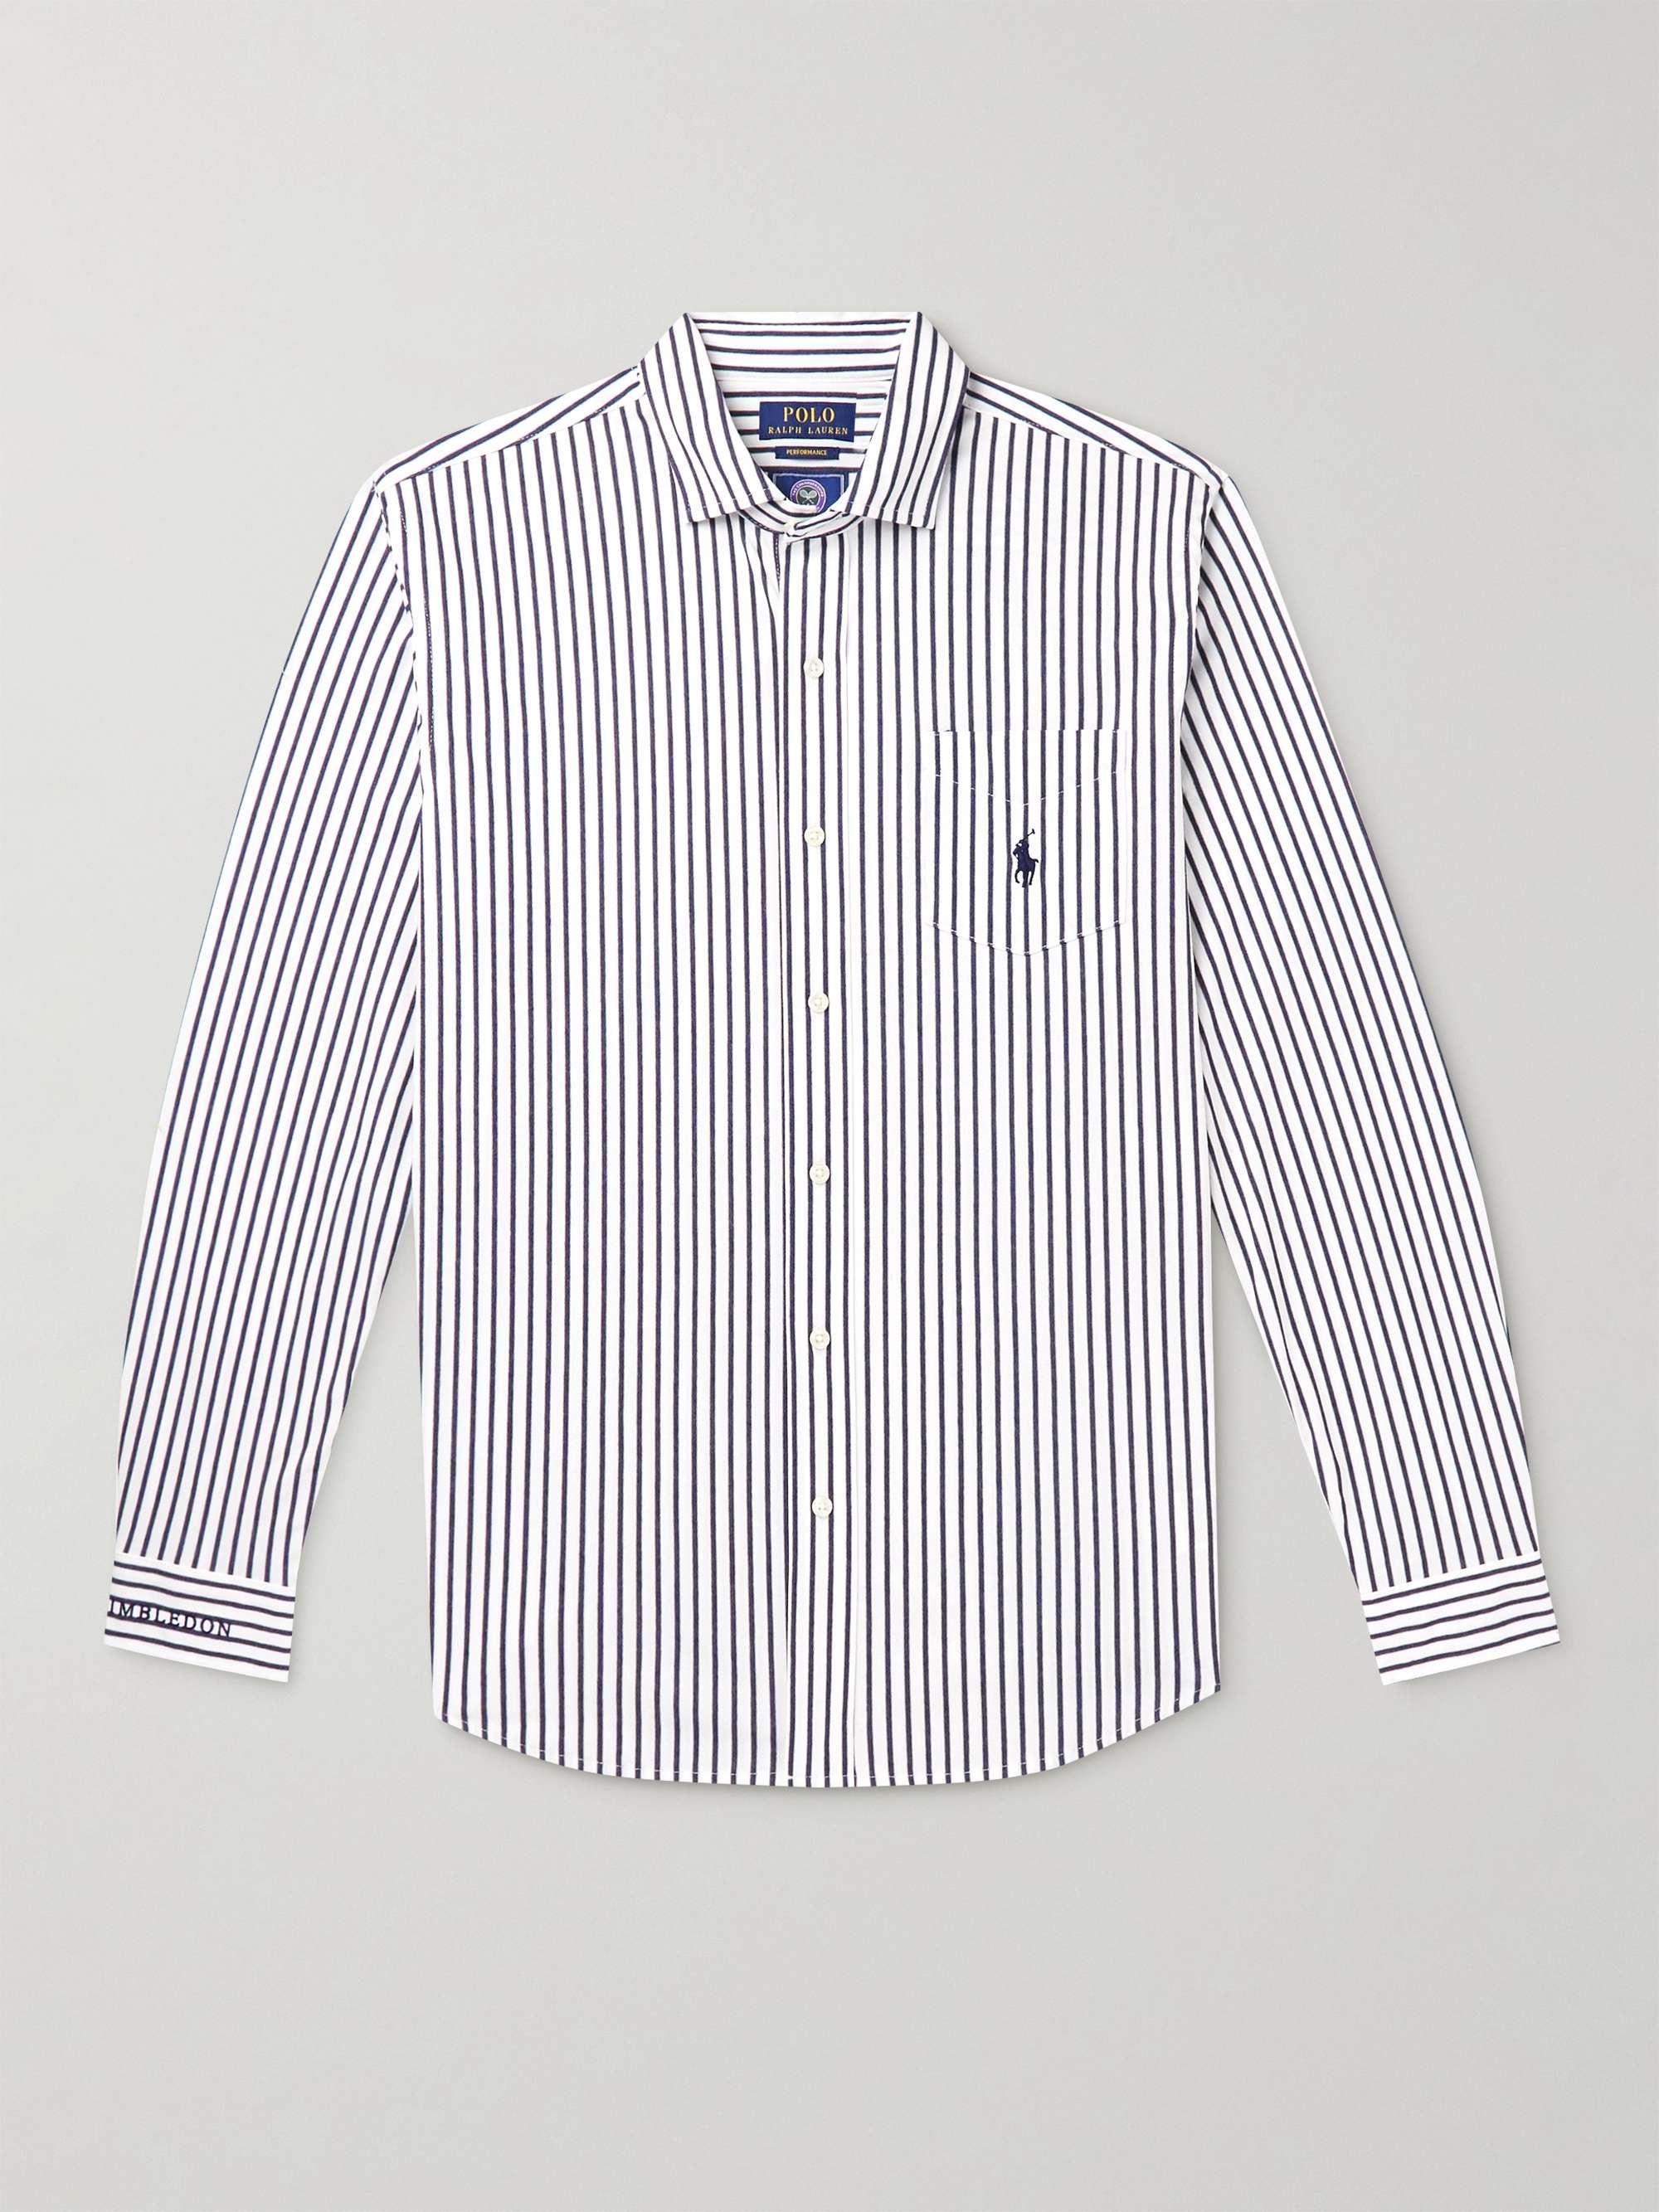 POLO RALPH LAUREN Wimbledon Logo-Embroidered Striped Cotton-Jersey Polo  Shirt for Men